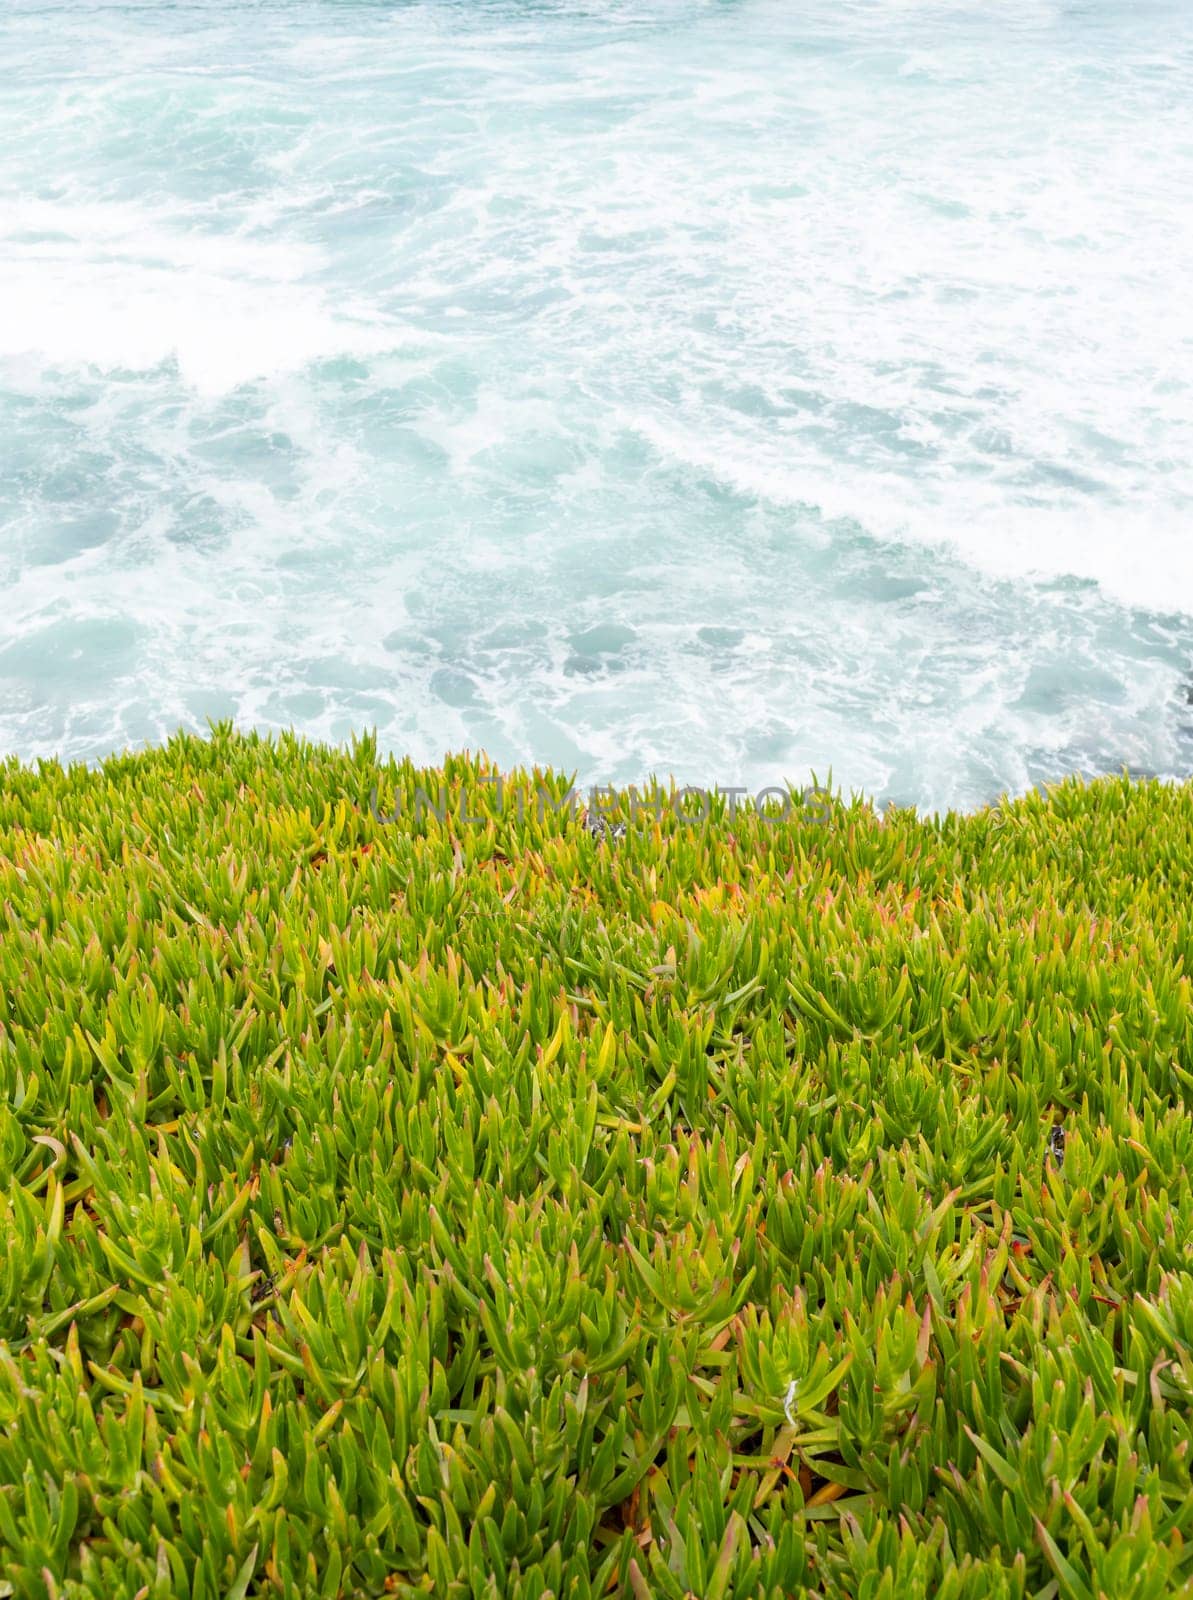 Coronado Beach. Sea or Ocean Waves along Green Grass, Plant on Pacific coast line in San Diego, USA, California. Wallpaper, Scenic Backdrop. Vertical by netatsi